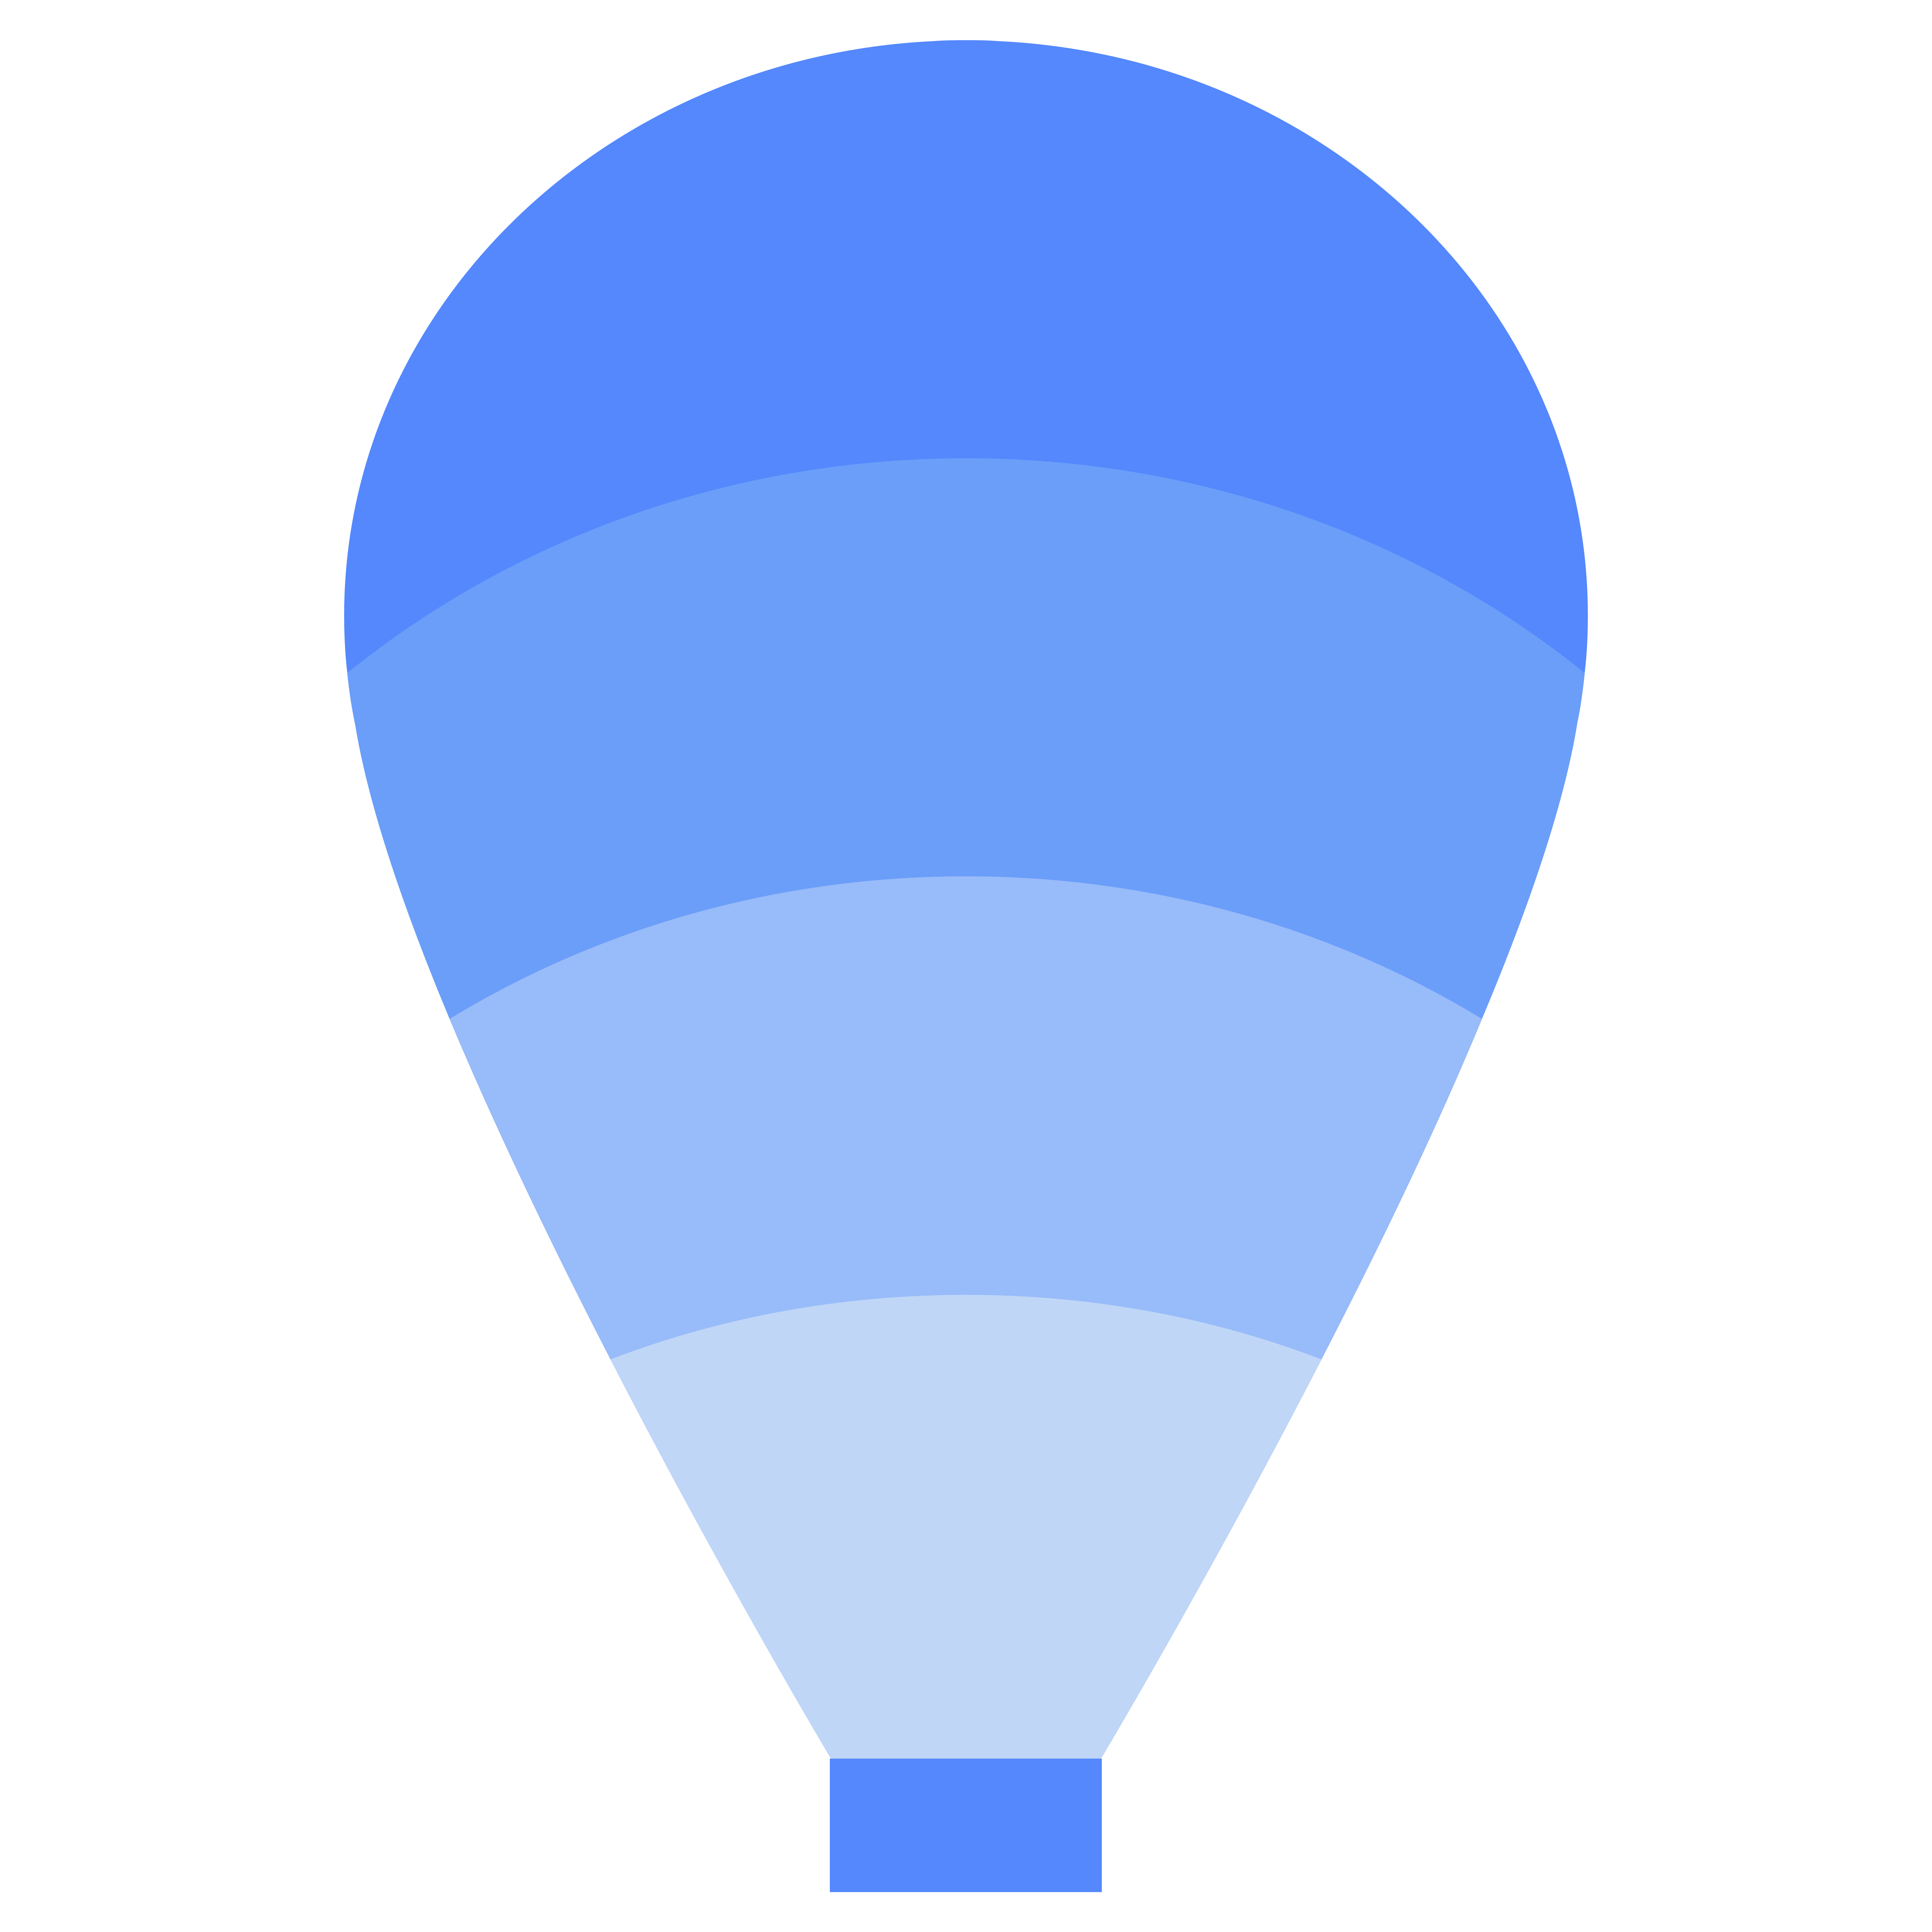 Illustration of a blue lantern